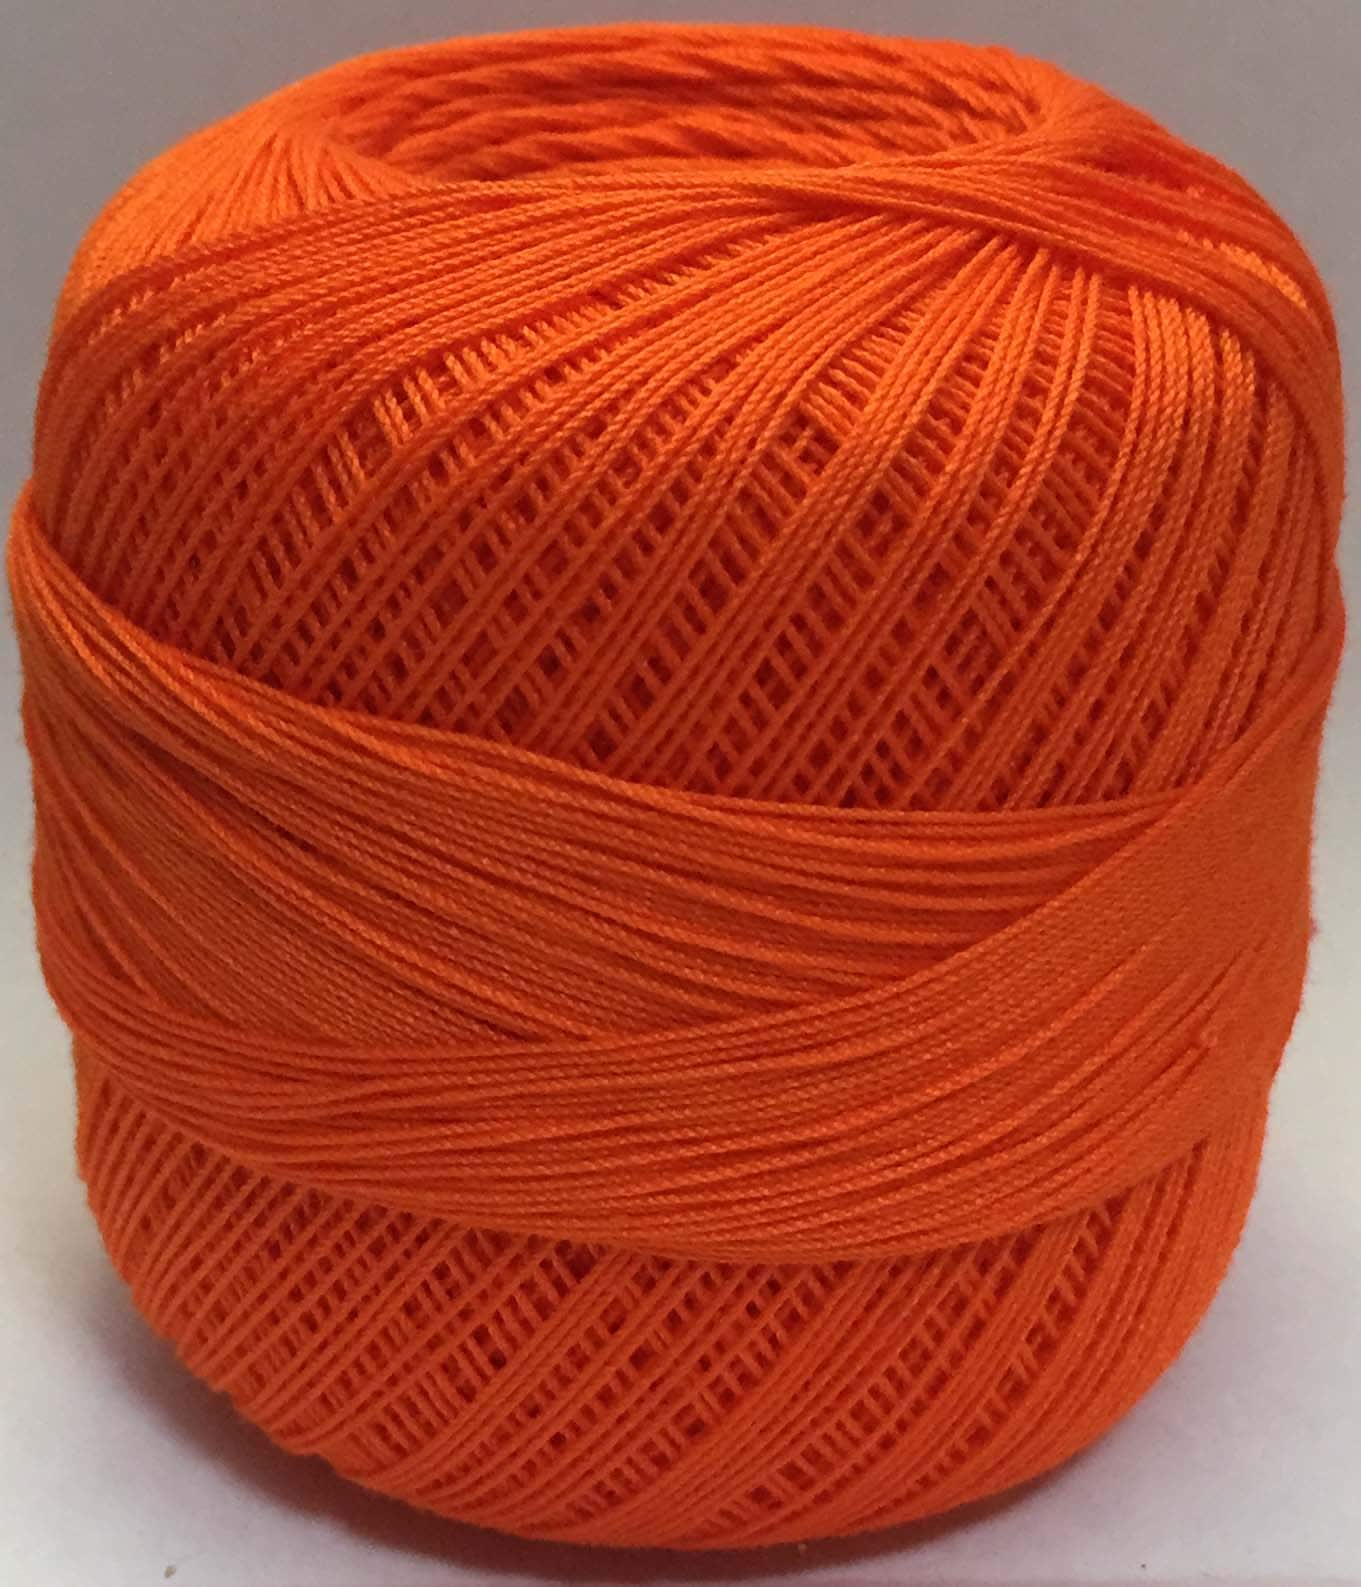 Hilo Crochet #20 color Crudo Caja de 12 pzs